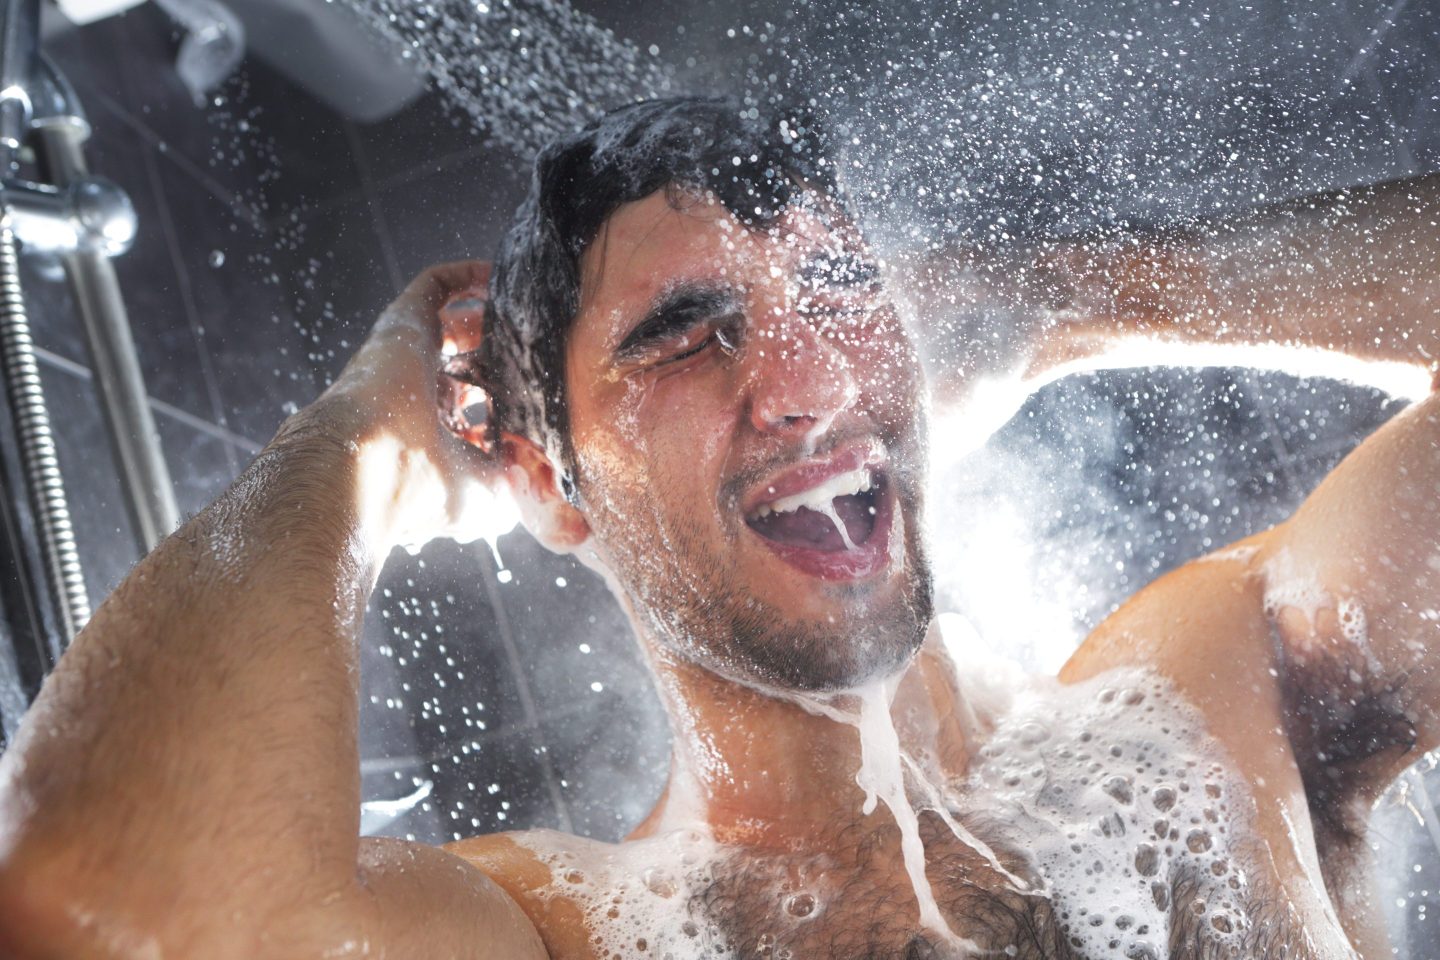 Man in shower, rinsing shampoo from hair